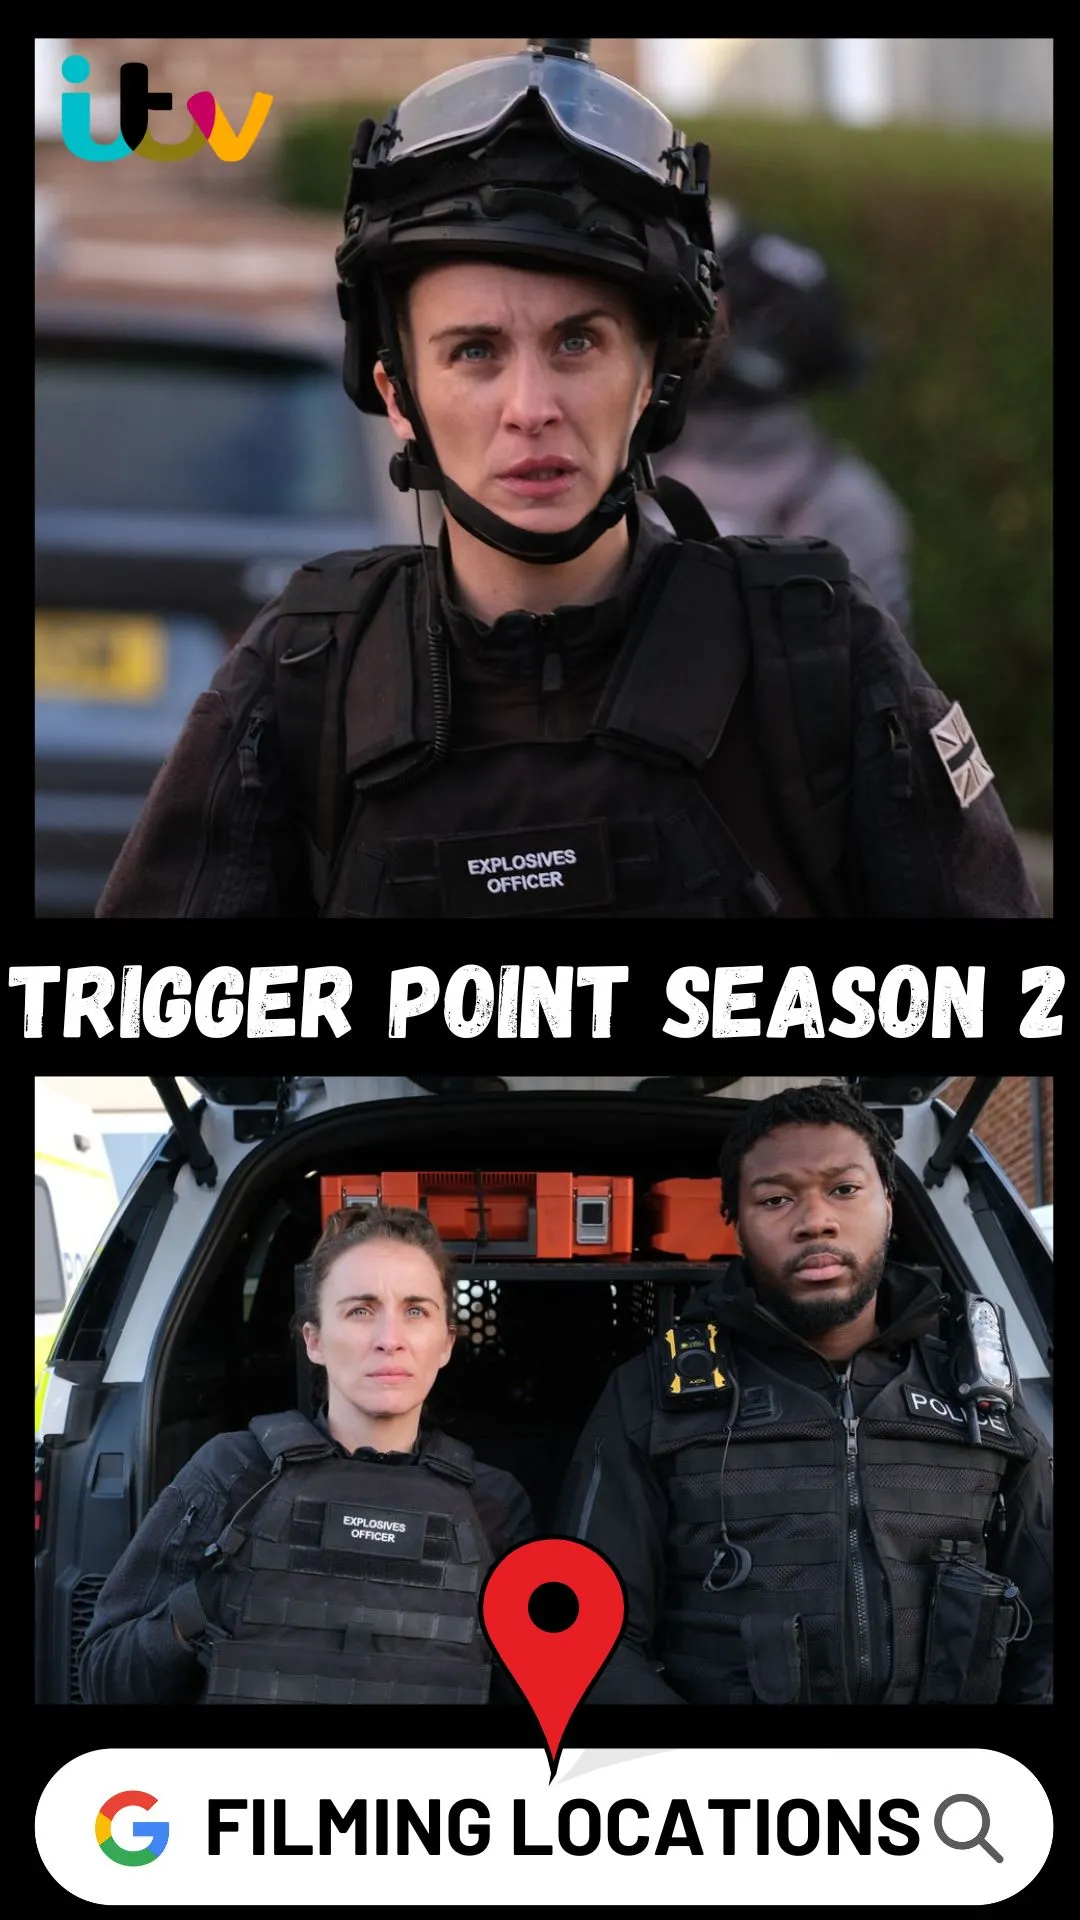 Trigger Point Season 2 Filming Locations